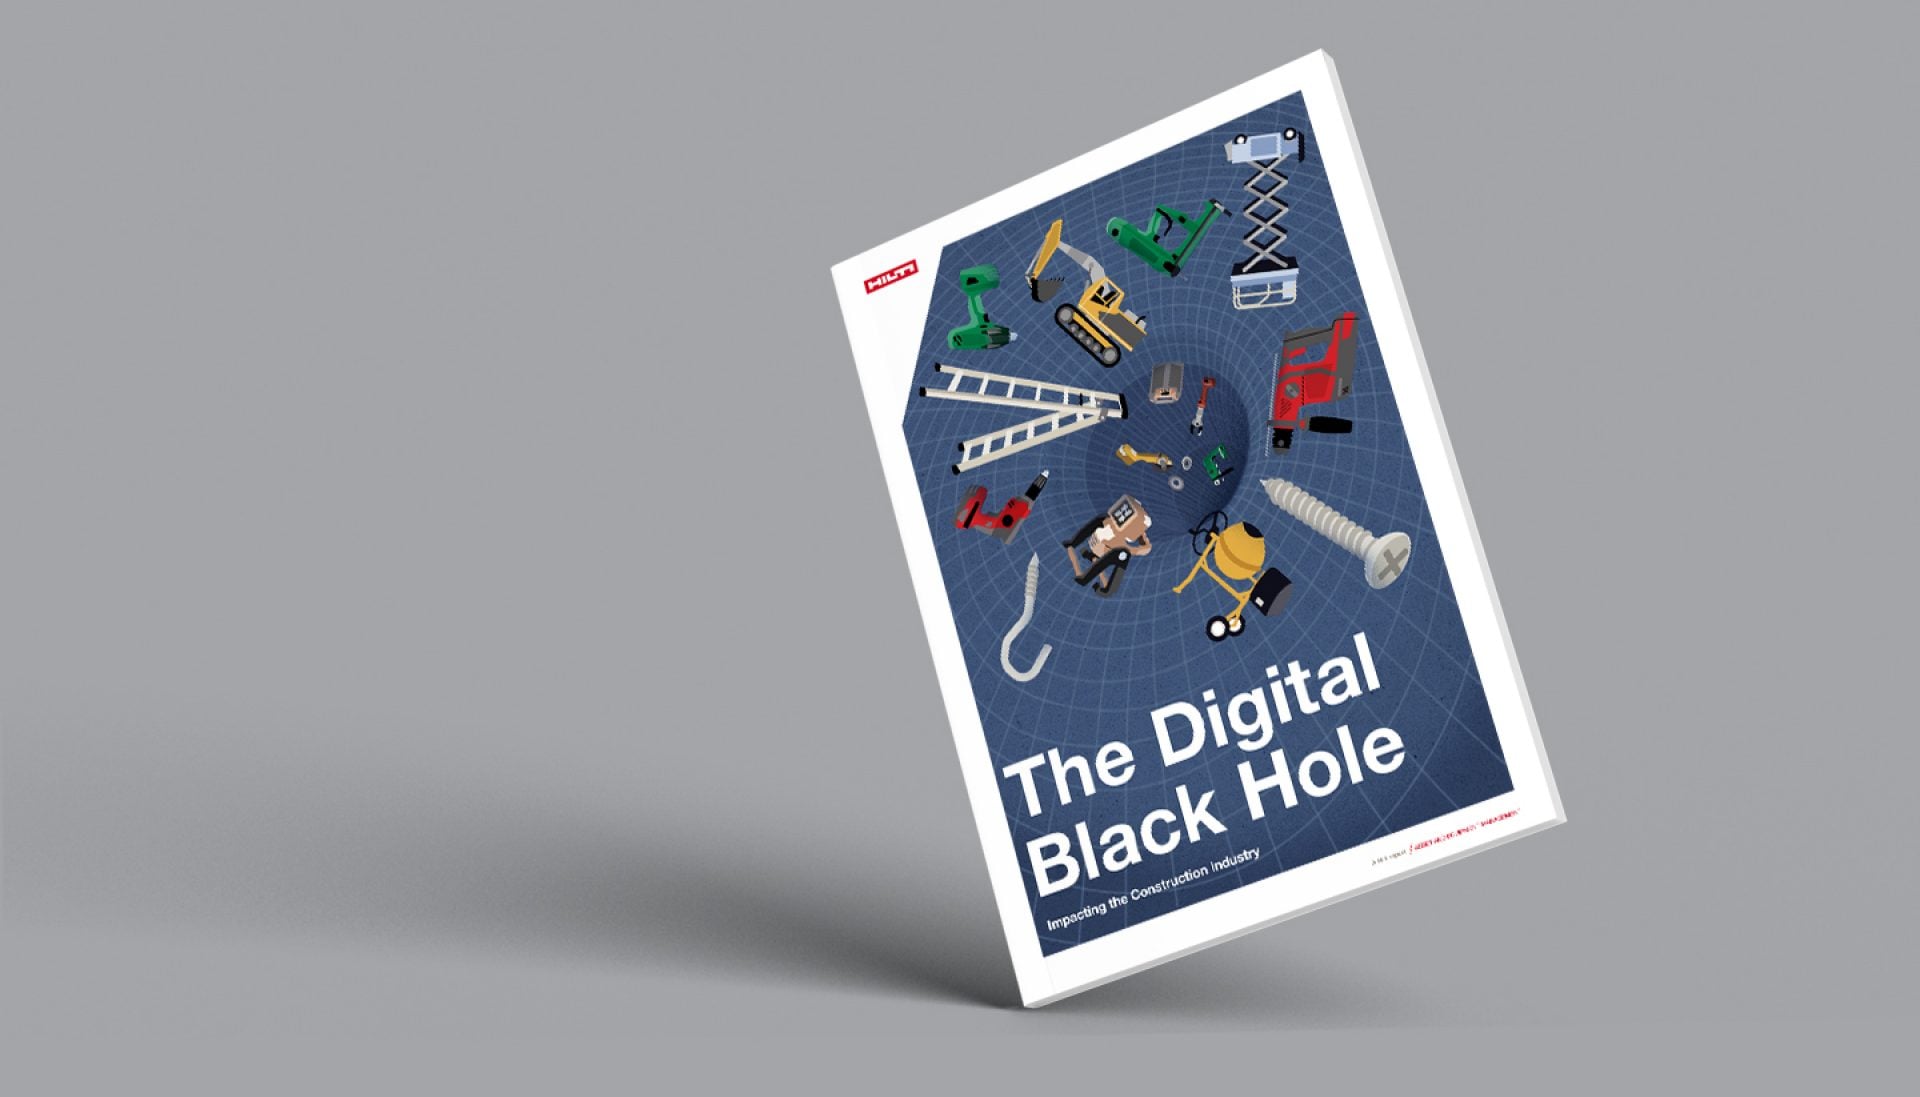 The Digital Black Hole